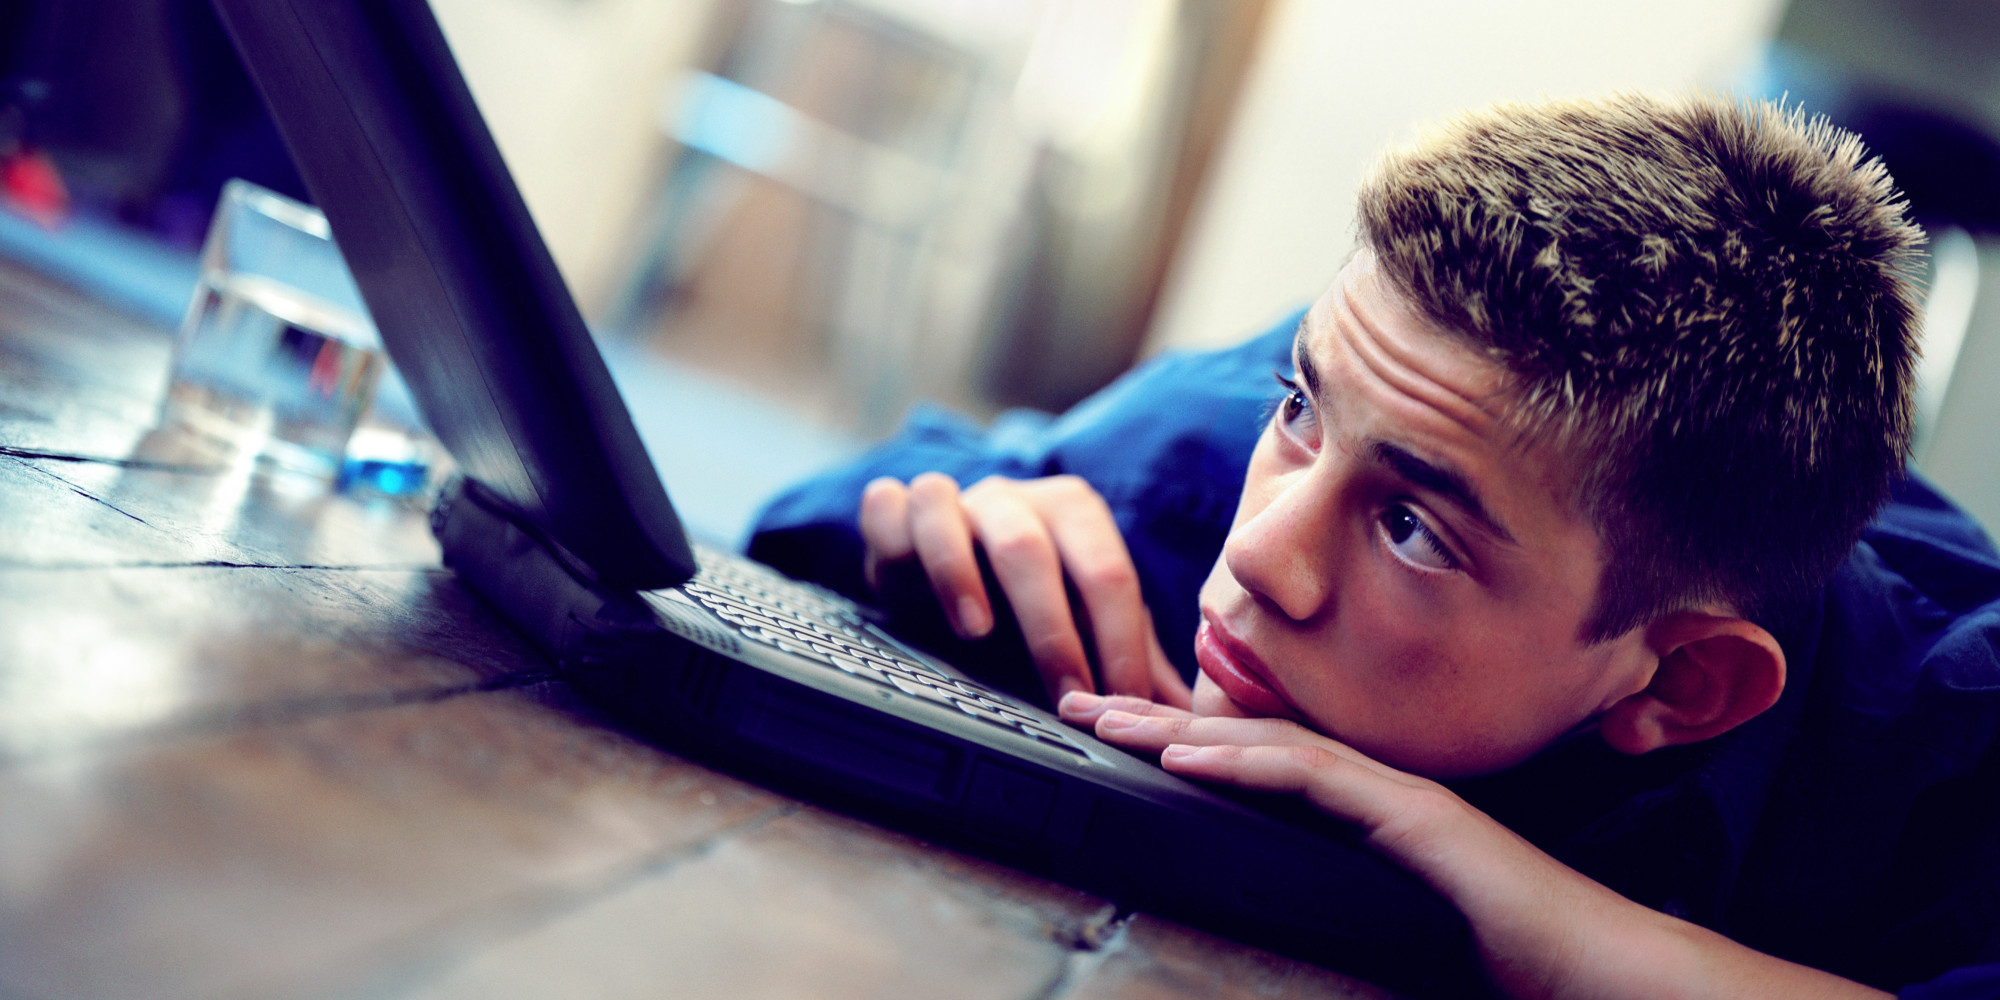 Boy (12-14) resting on laptop